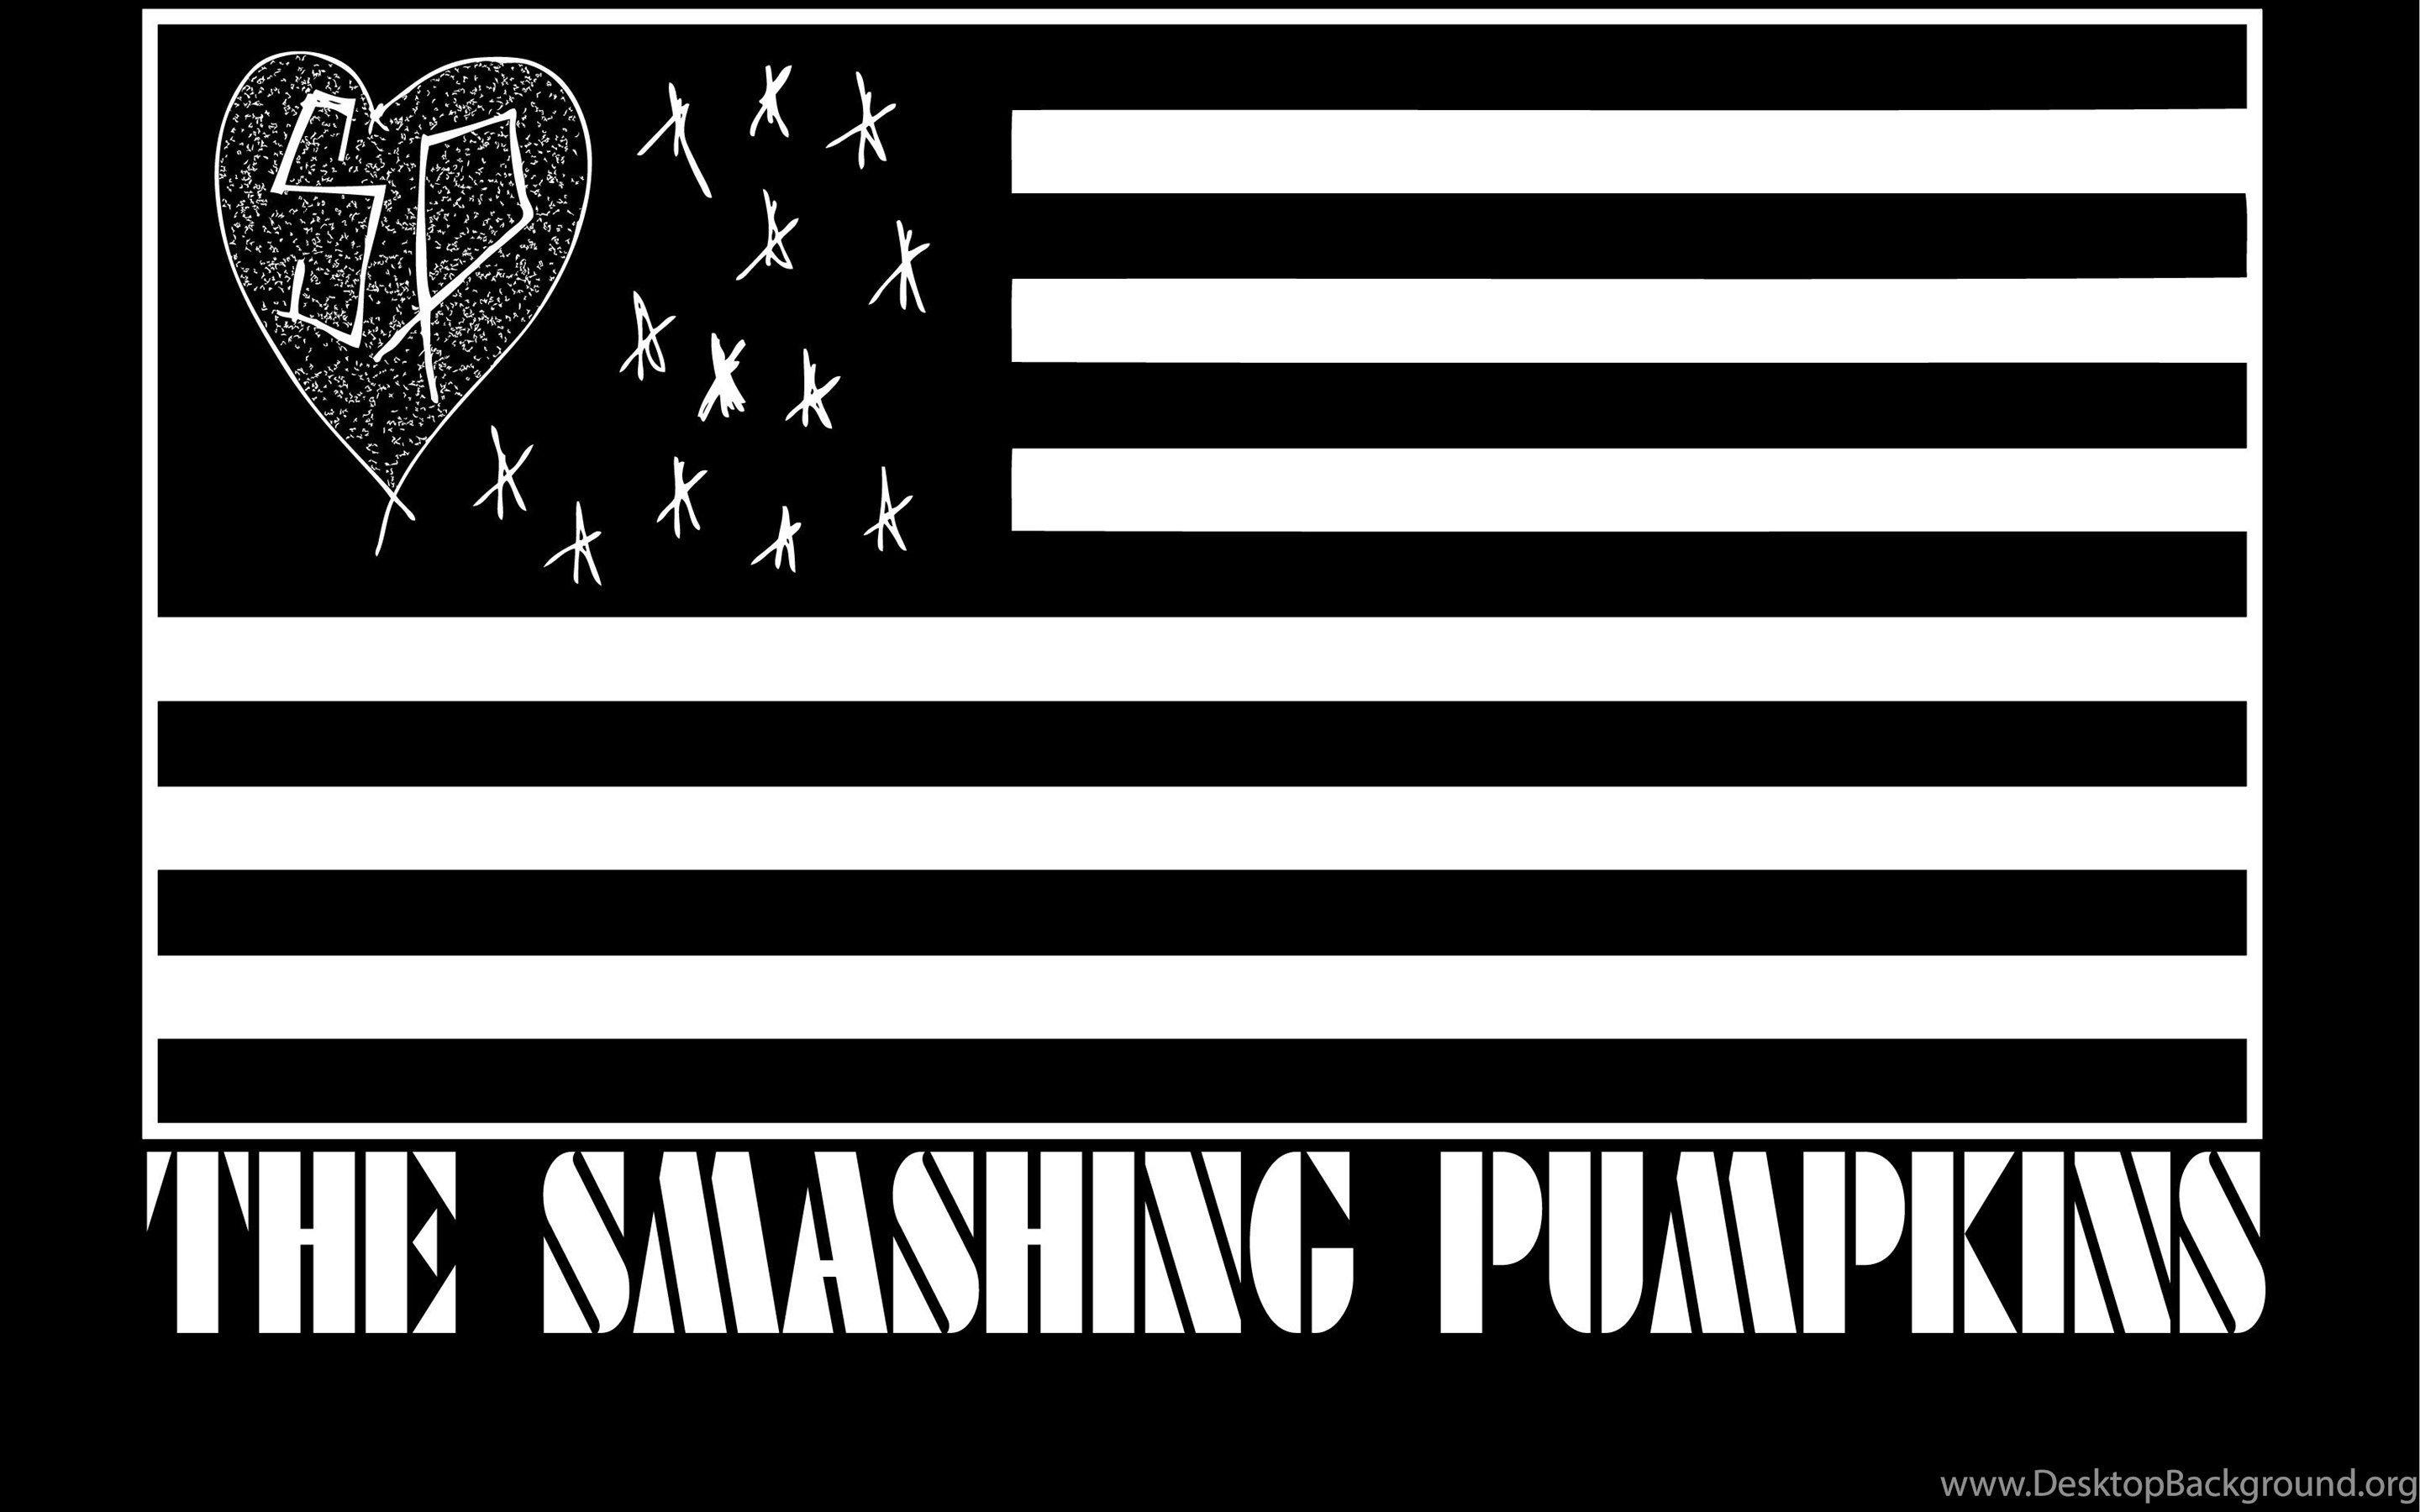 SMASHING PUMPKINS Alternative Rock Smashing pumpkins Wallpaper